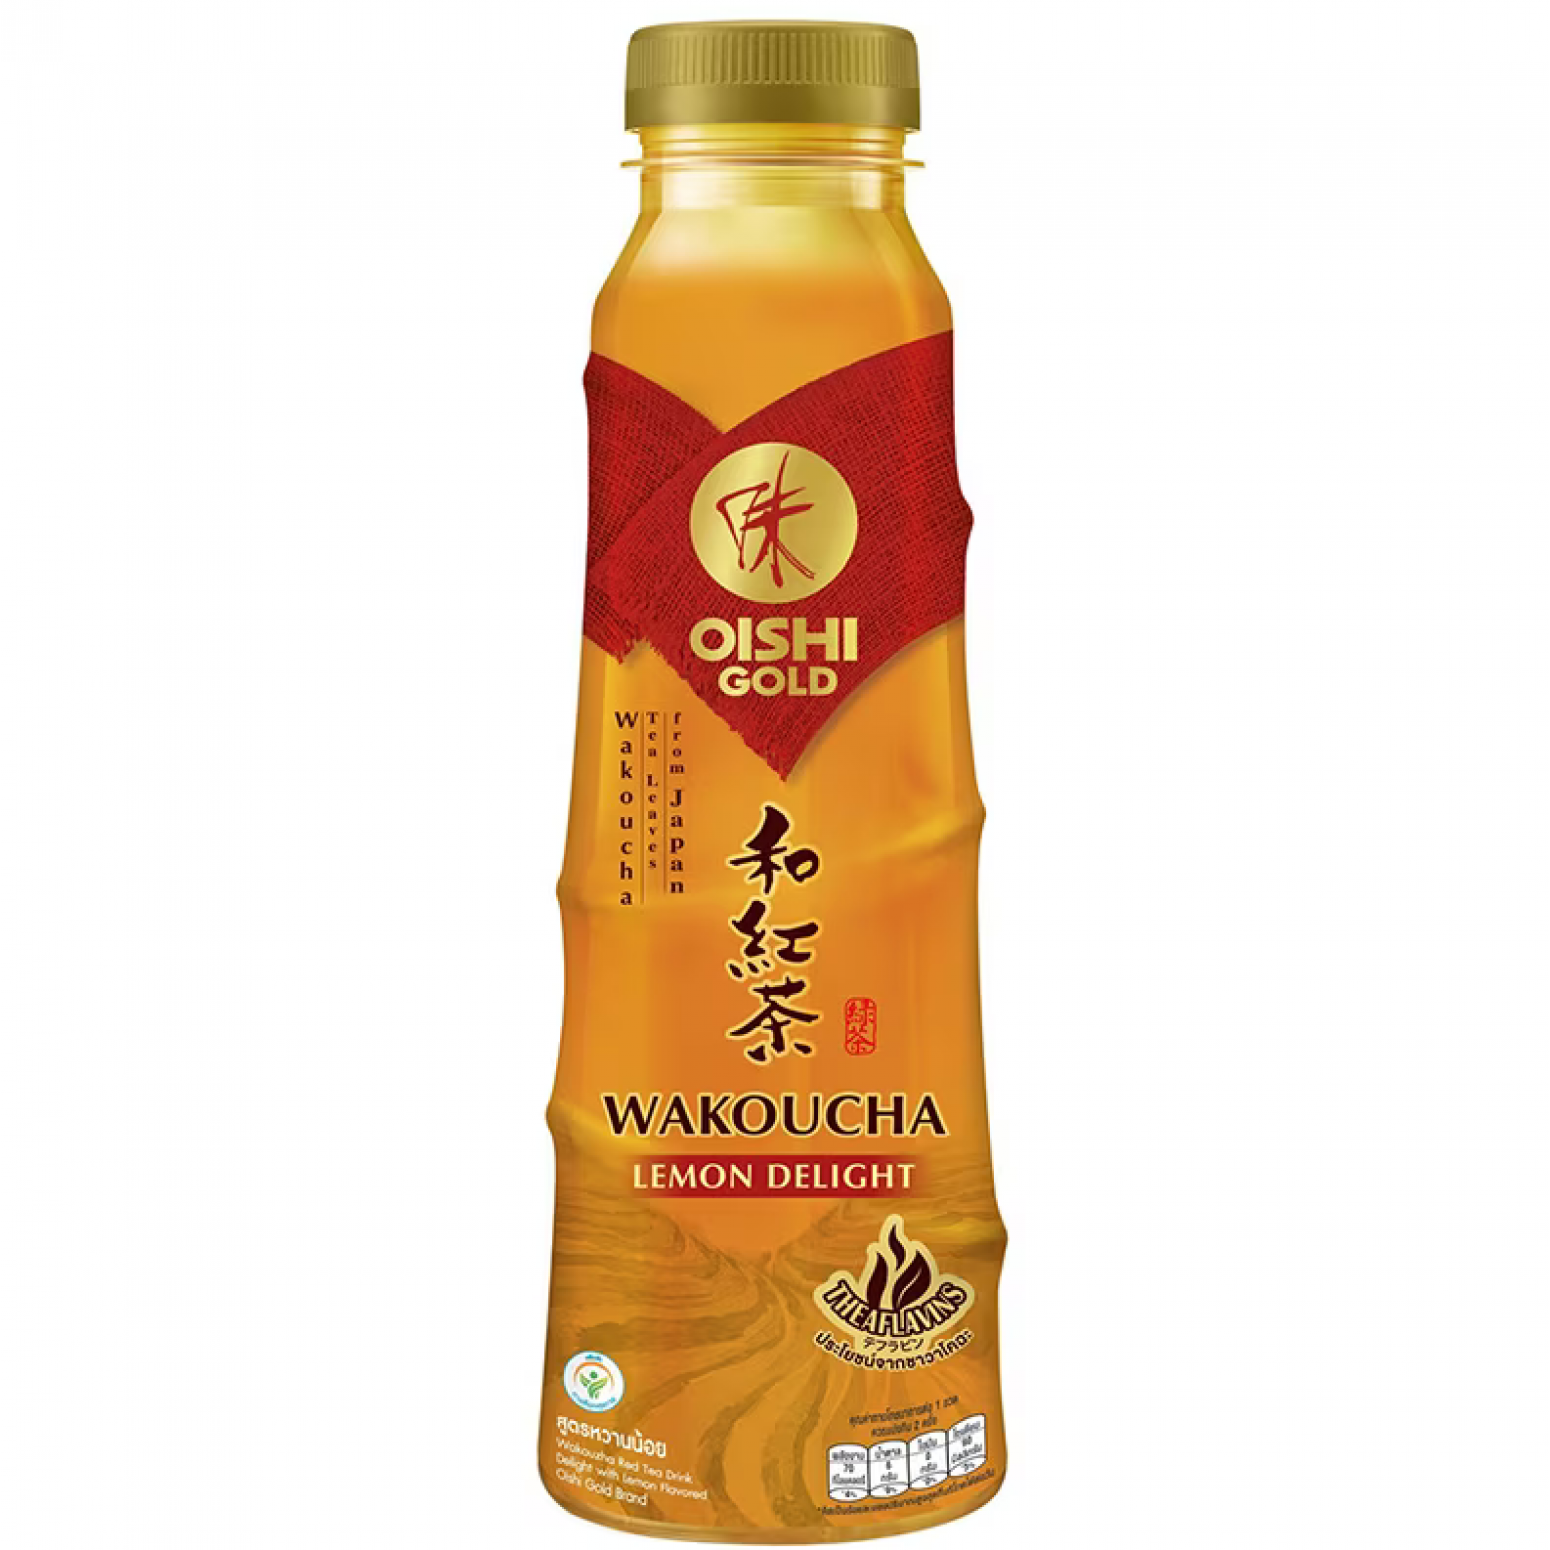 Oishi Gold Wakoucha Tea Drink Delight with Lemon Flavoured 400ml.